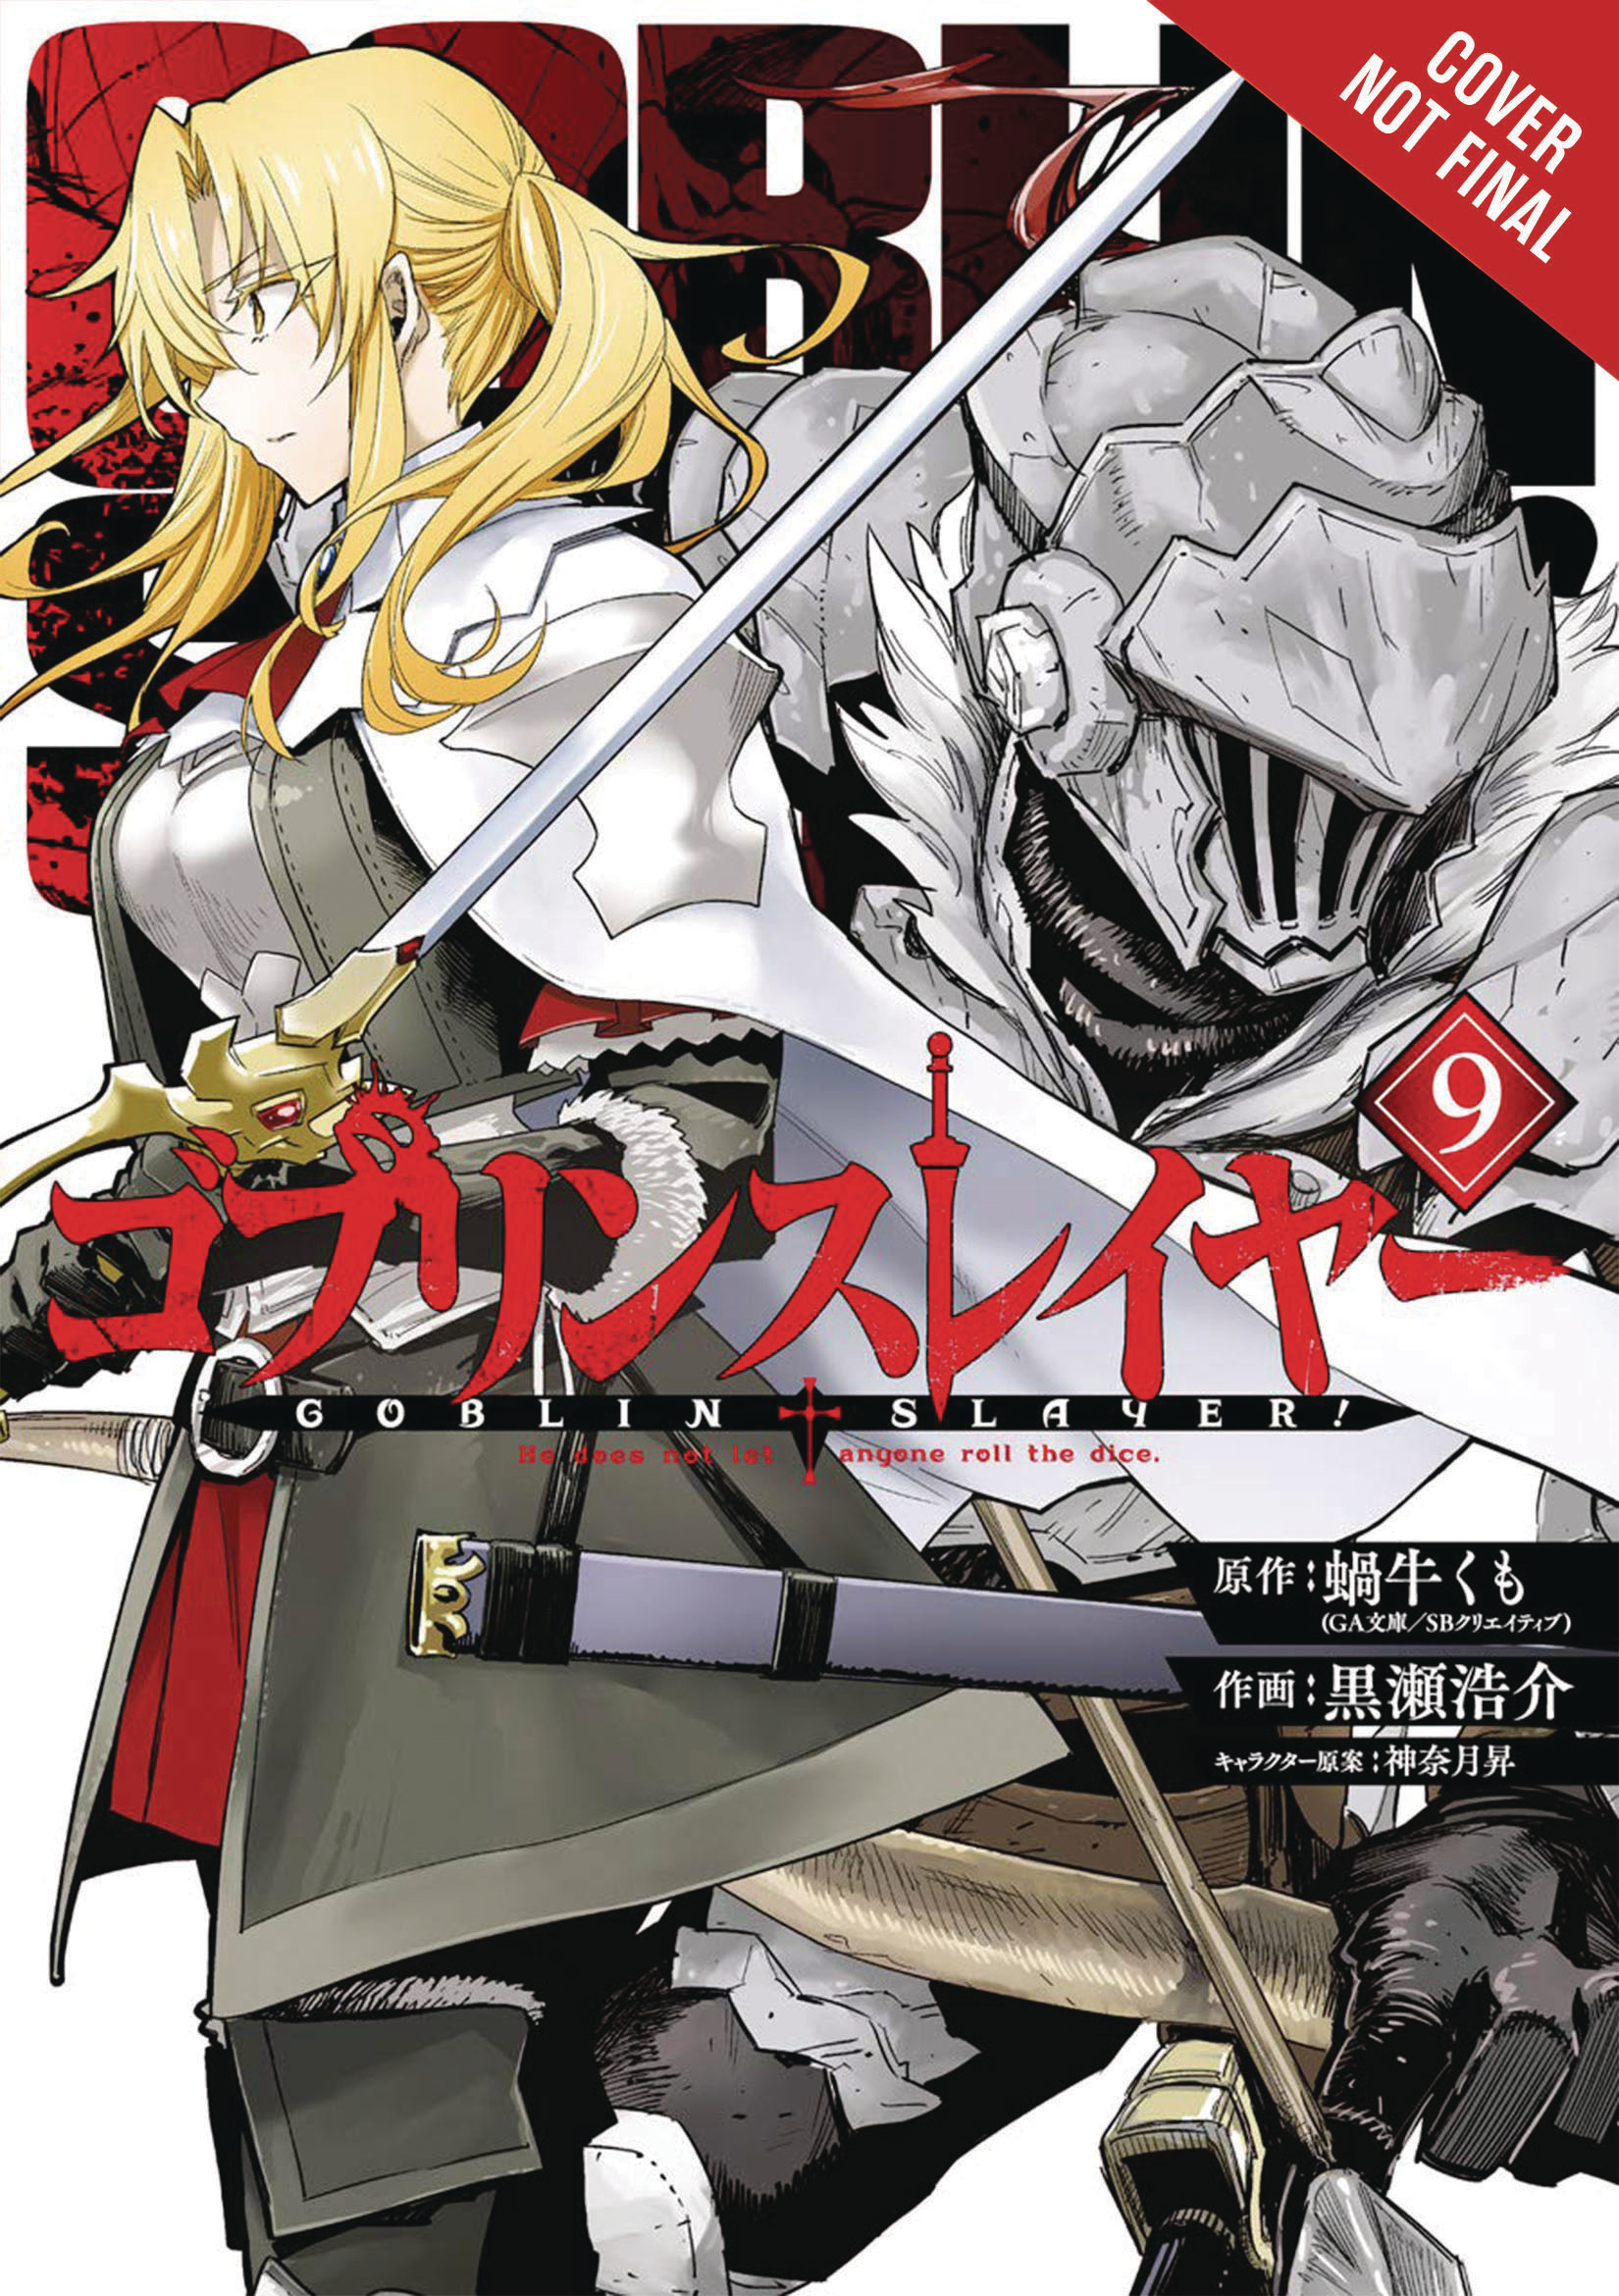 Goblin Slayer Manga Volume 9 (Mature)